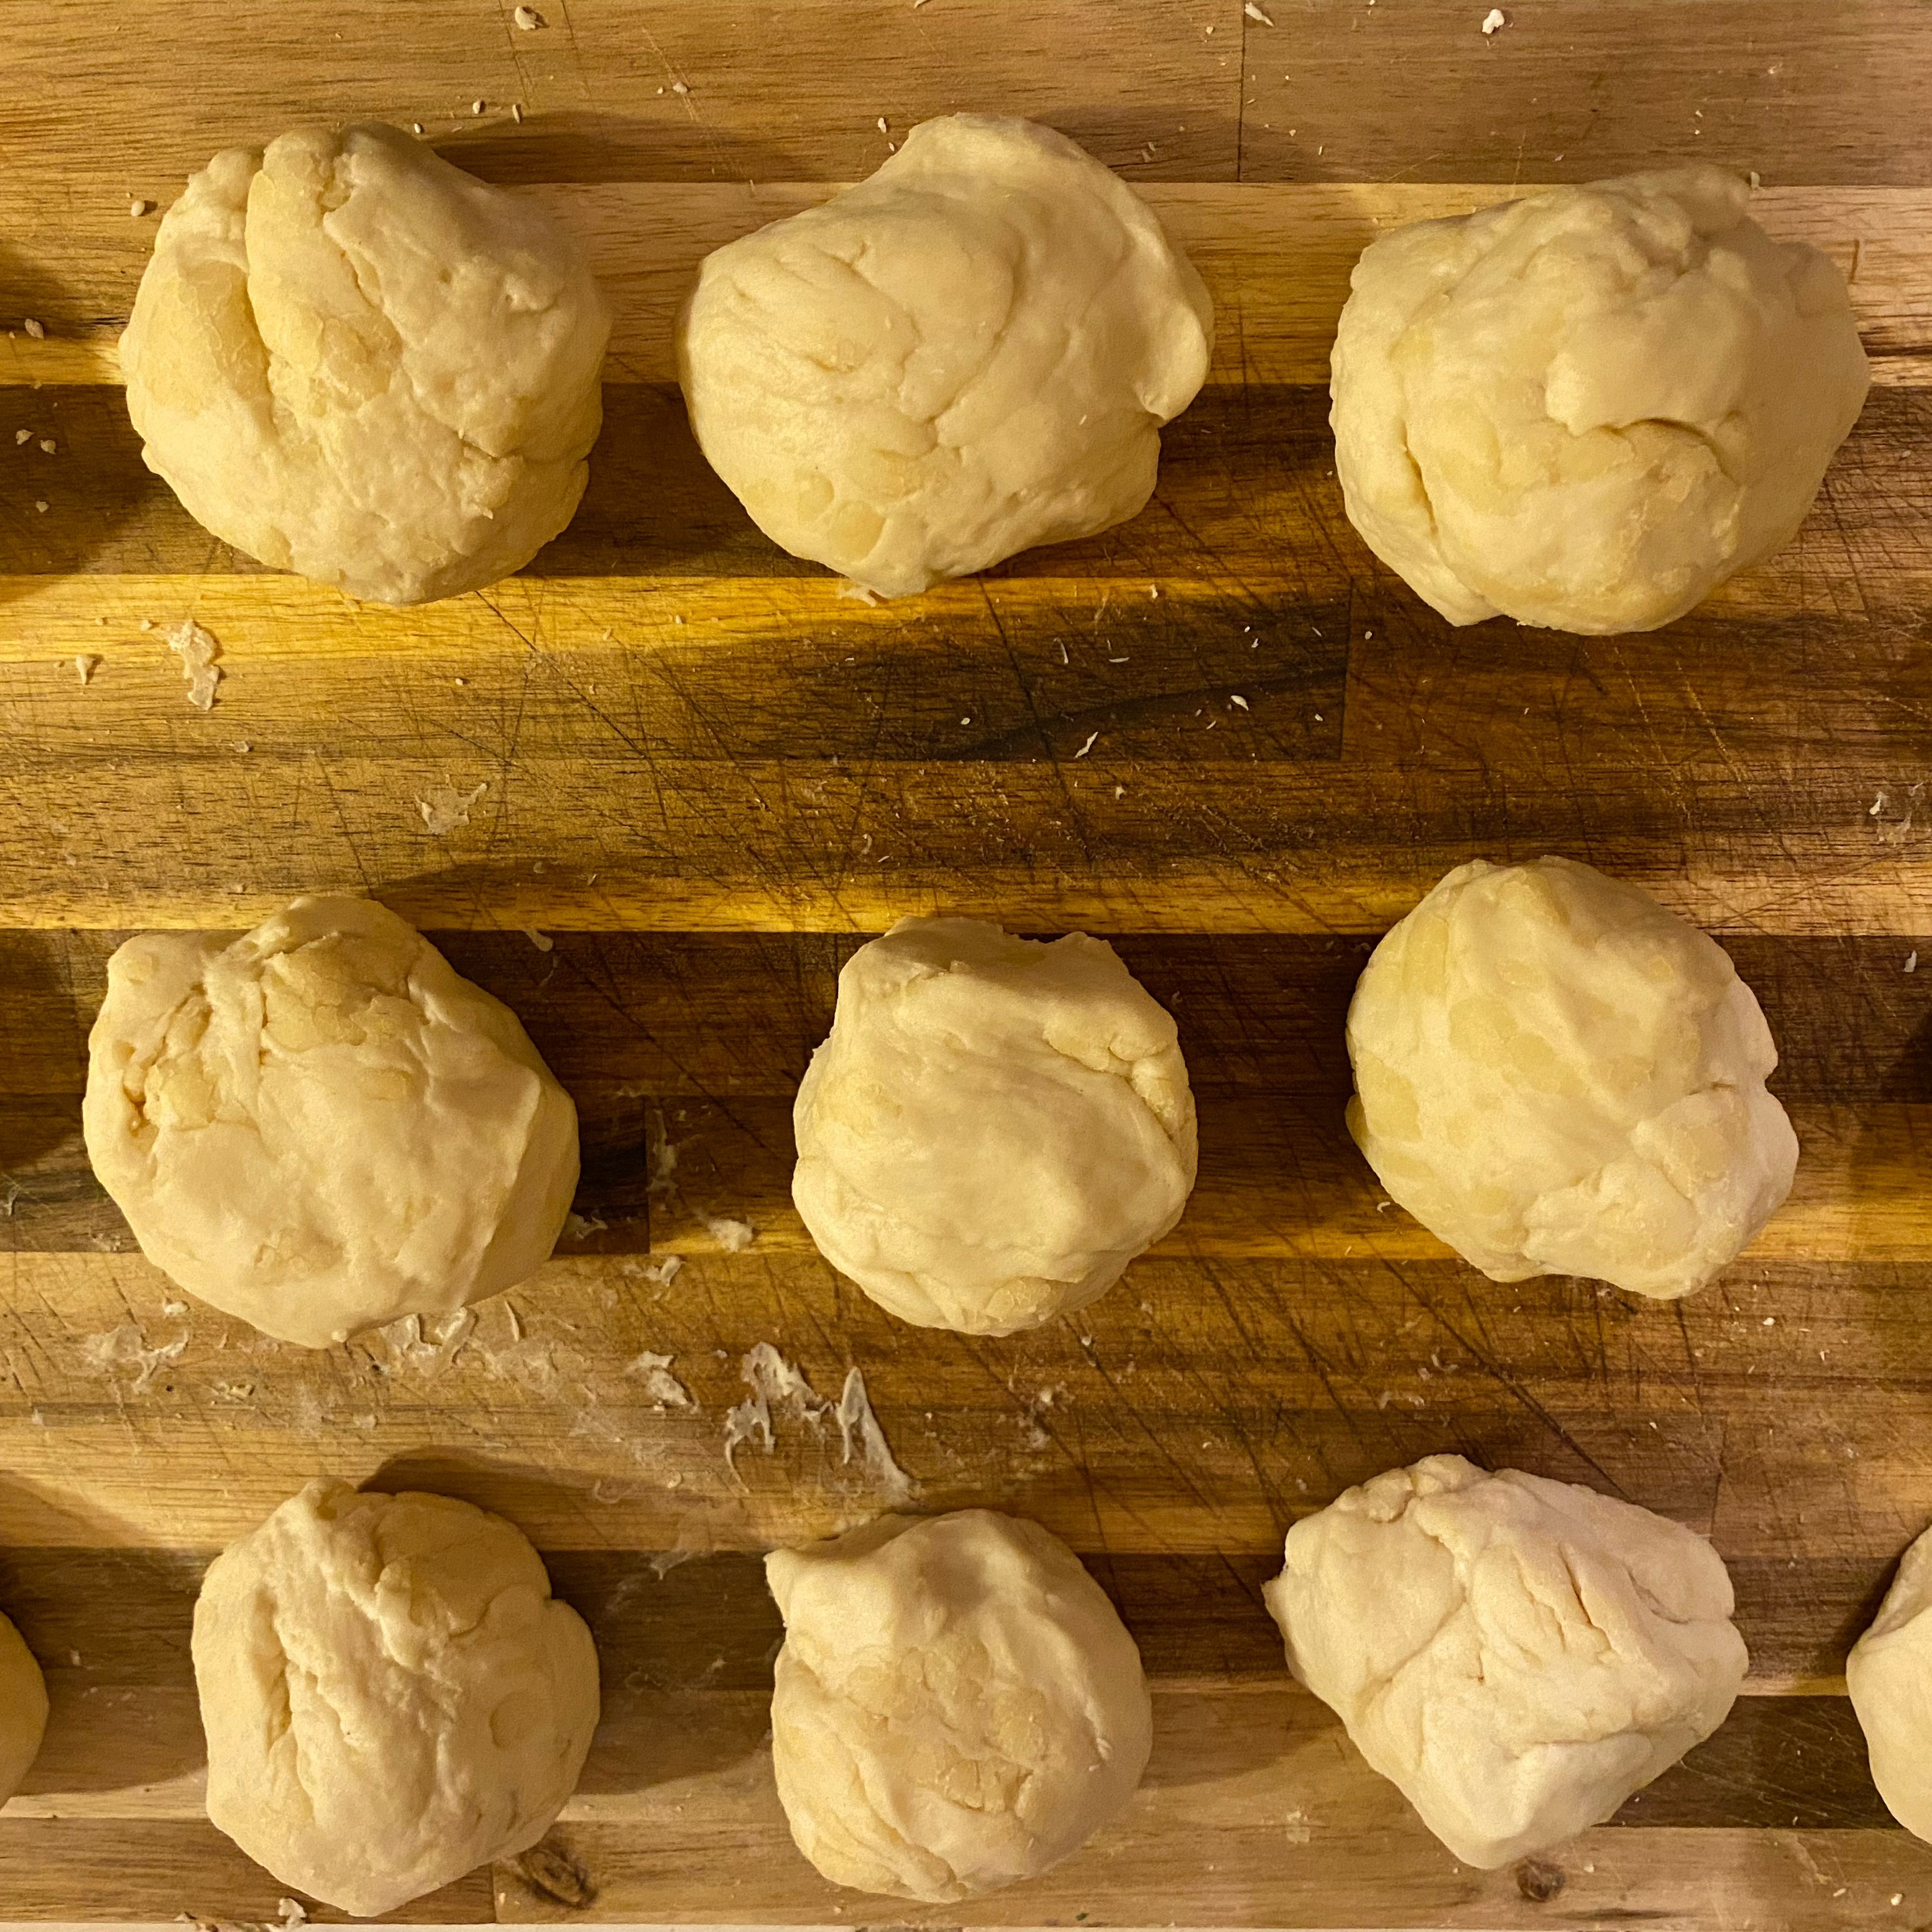 Roll each dough ball into a 5 inch circle.